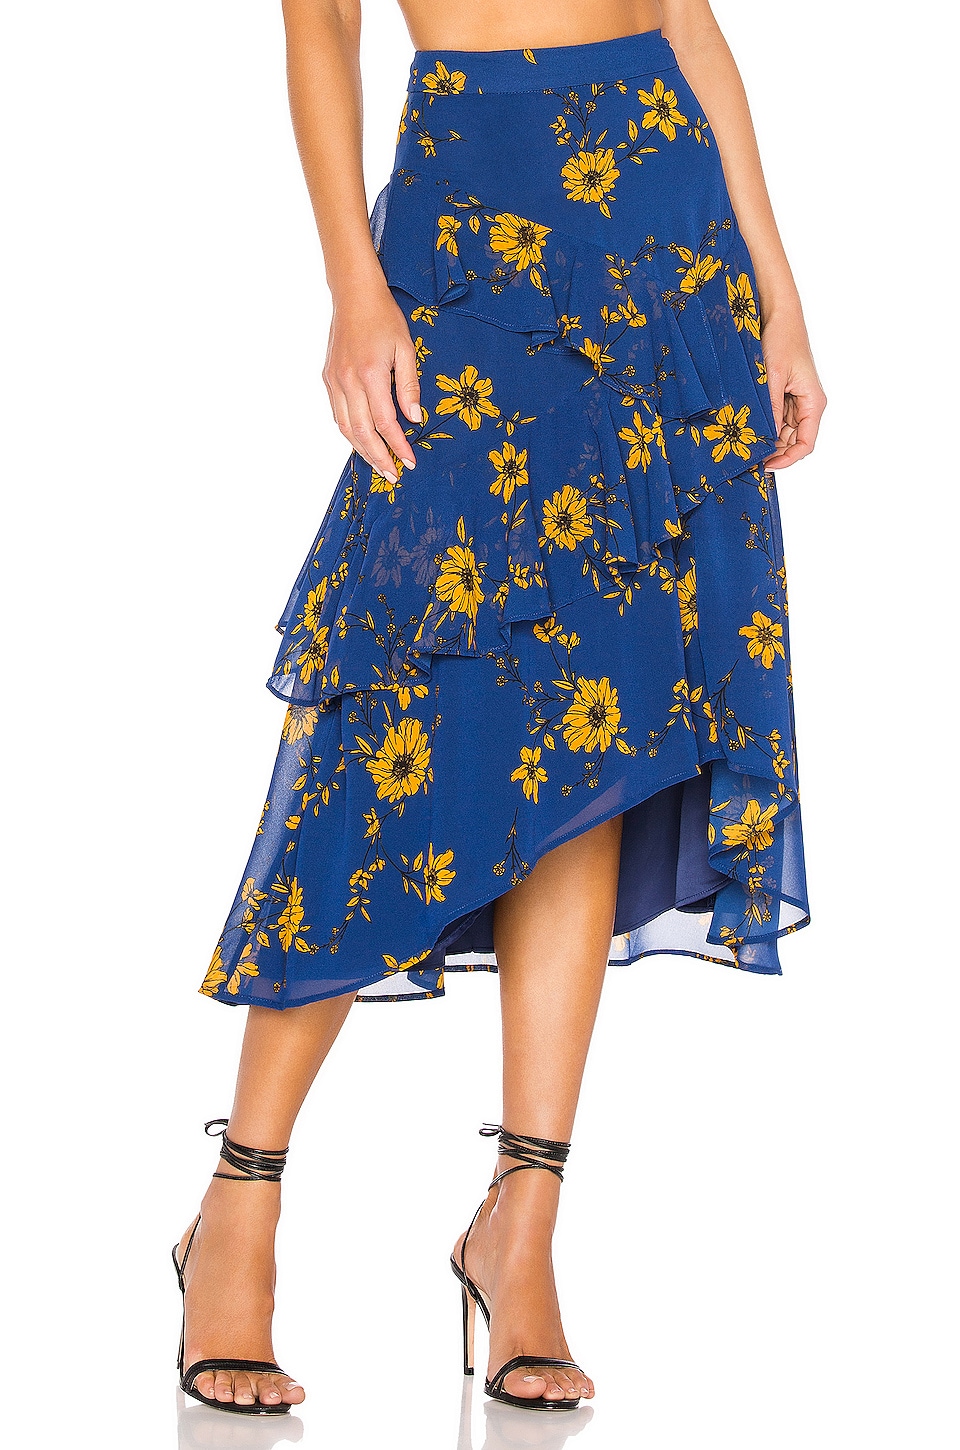 House of Harlow 1960 X REVOLVE Jacinda Midi Skirt in Blue Daisy Floral ...